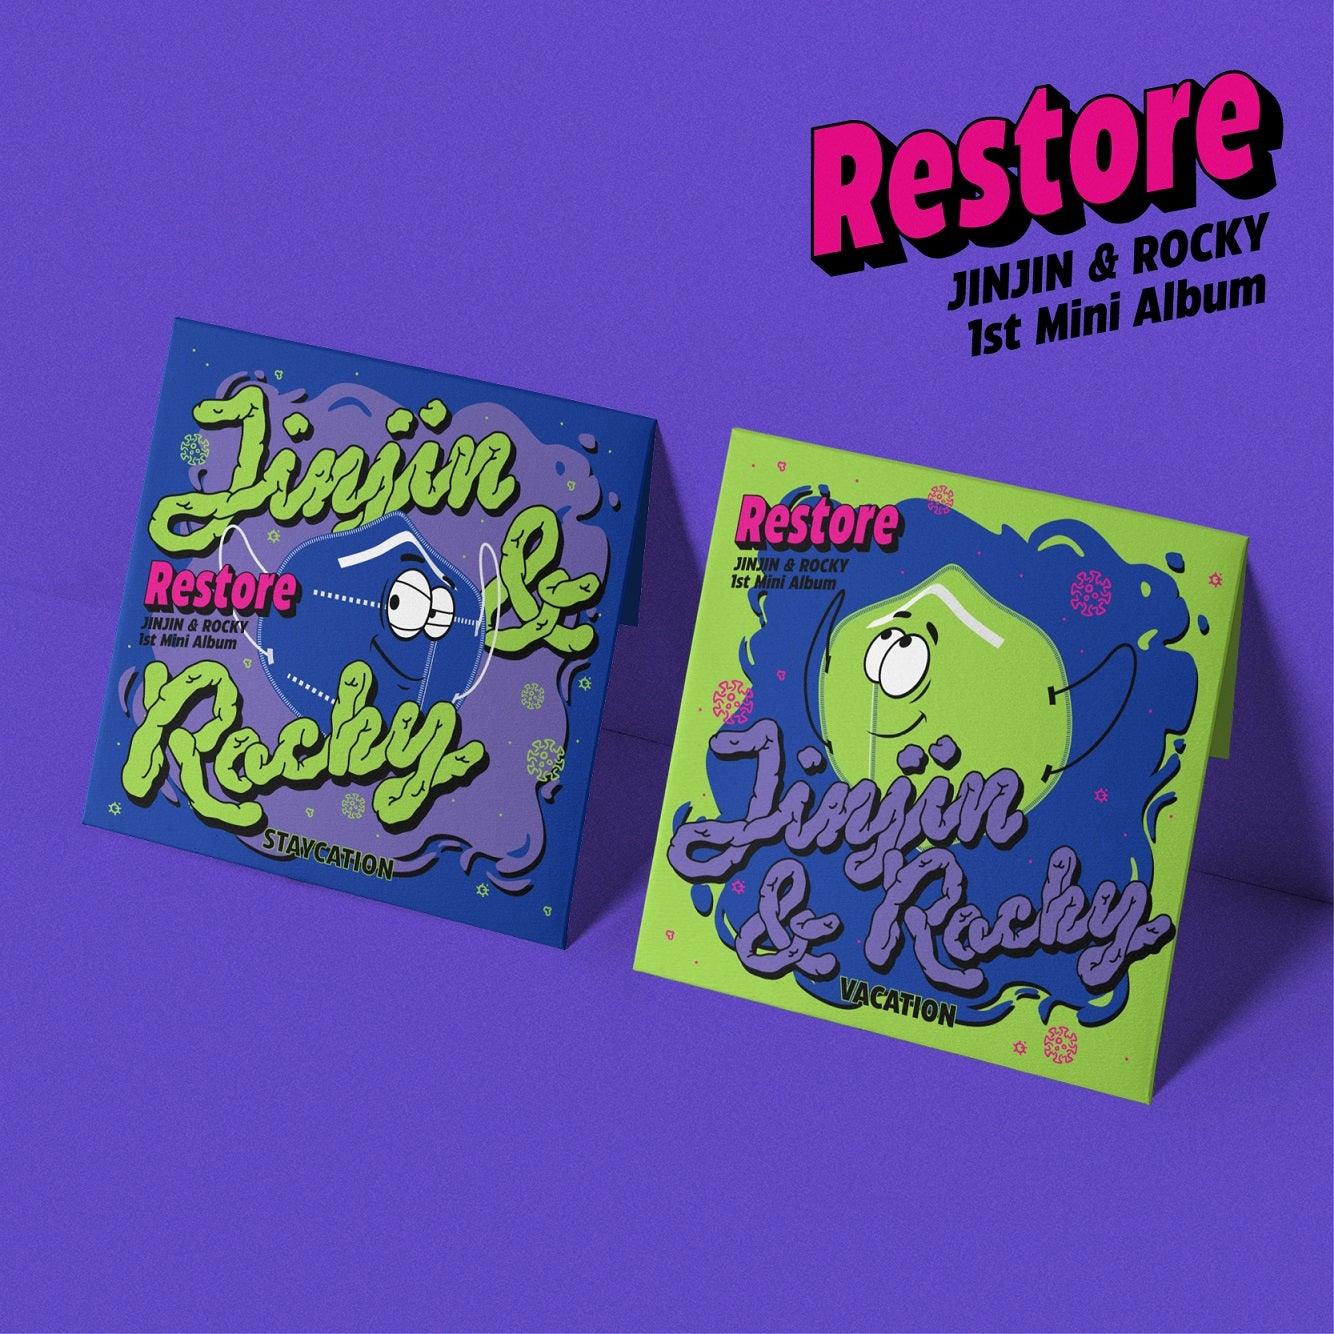 JINJIN & ROCKY (ASTRO) 1ST MINI ALBUM 'RESTORE' DETAIL